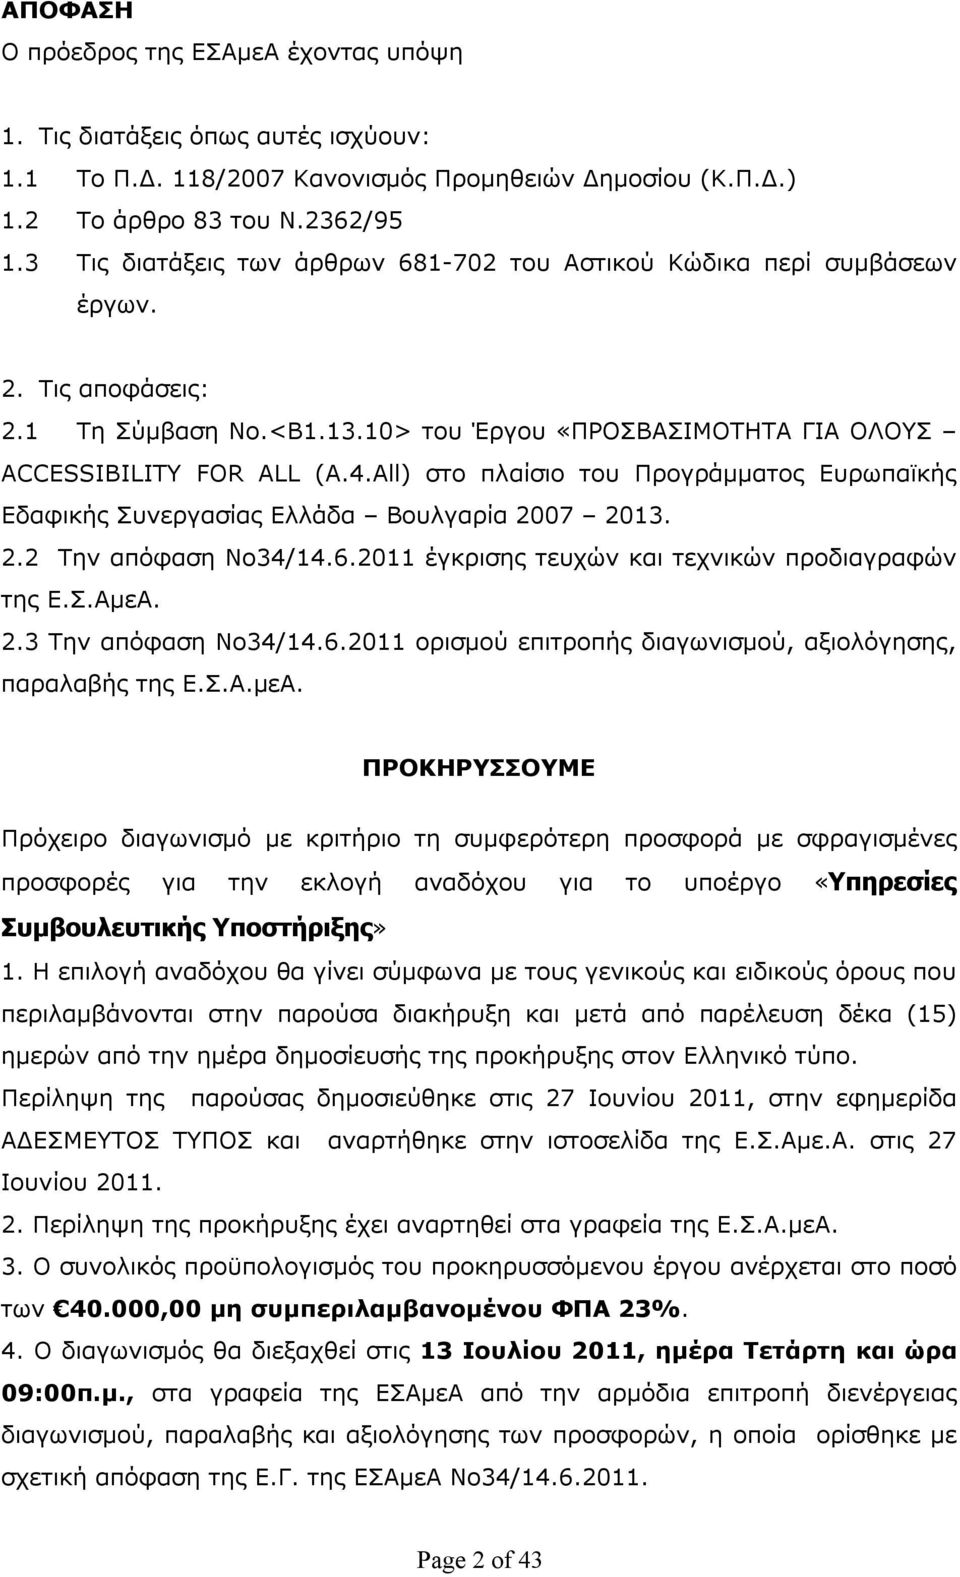 All) στο πλαίσιο του Προγράμματος Ευρωπαϊκής Εδαφικής Συνεργασίας Ελλάδα Βουλγαρία 2007 2013. 2.2 Την απόφαση No34/14.6.2011 έγκρισης τευχών και τεχνικών προδιαγραφών της Ε.Σ.ΑμεΑ. 2.3 Την απόφαση No34/14.